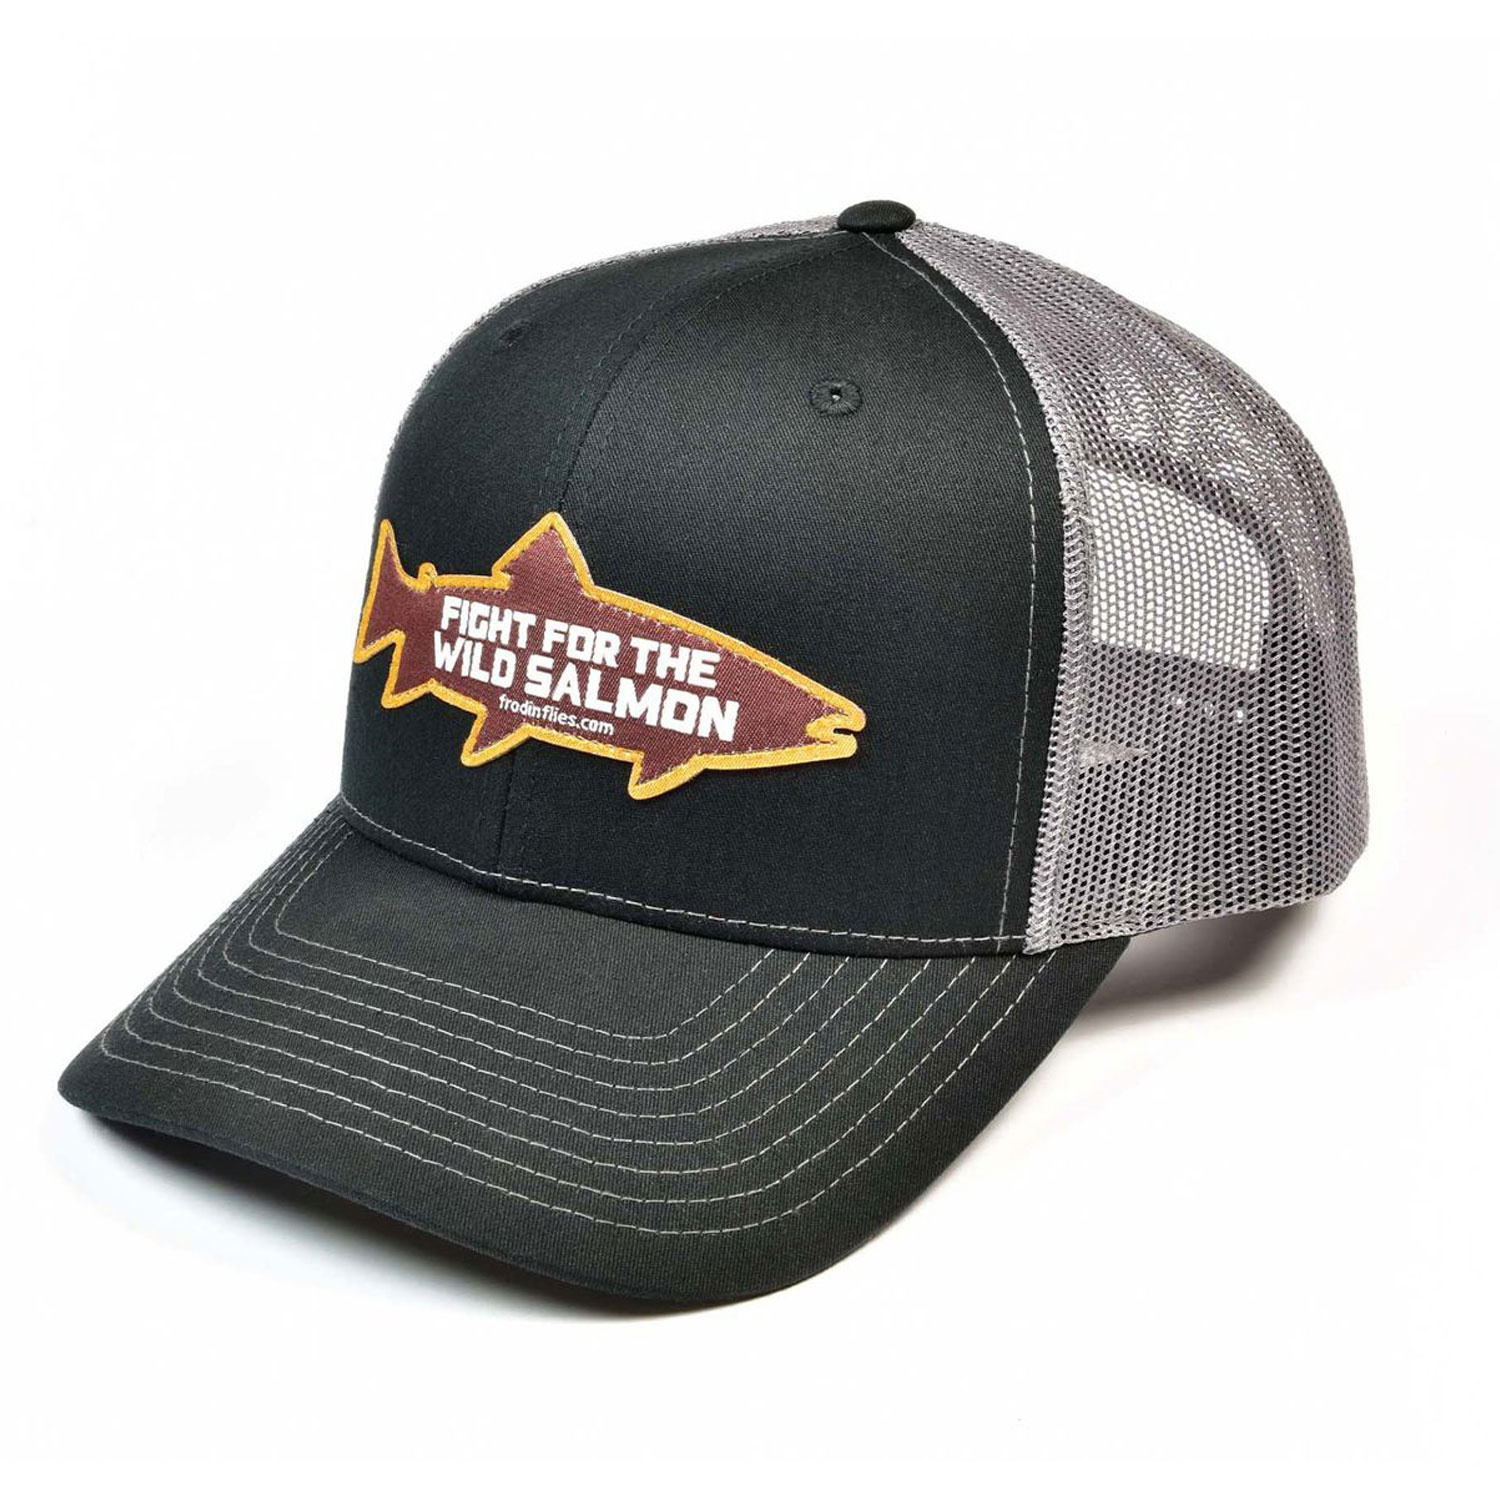 Frödin \'Wild Salmon\' Trucker Hat – Black/Grey